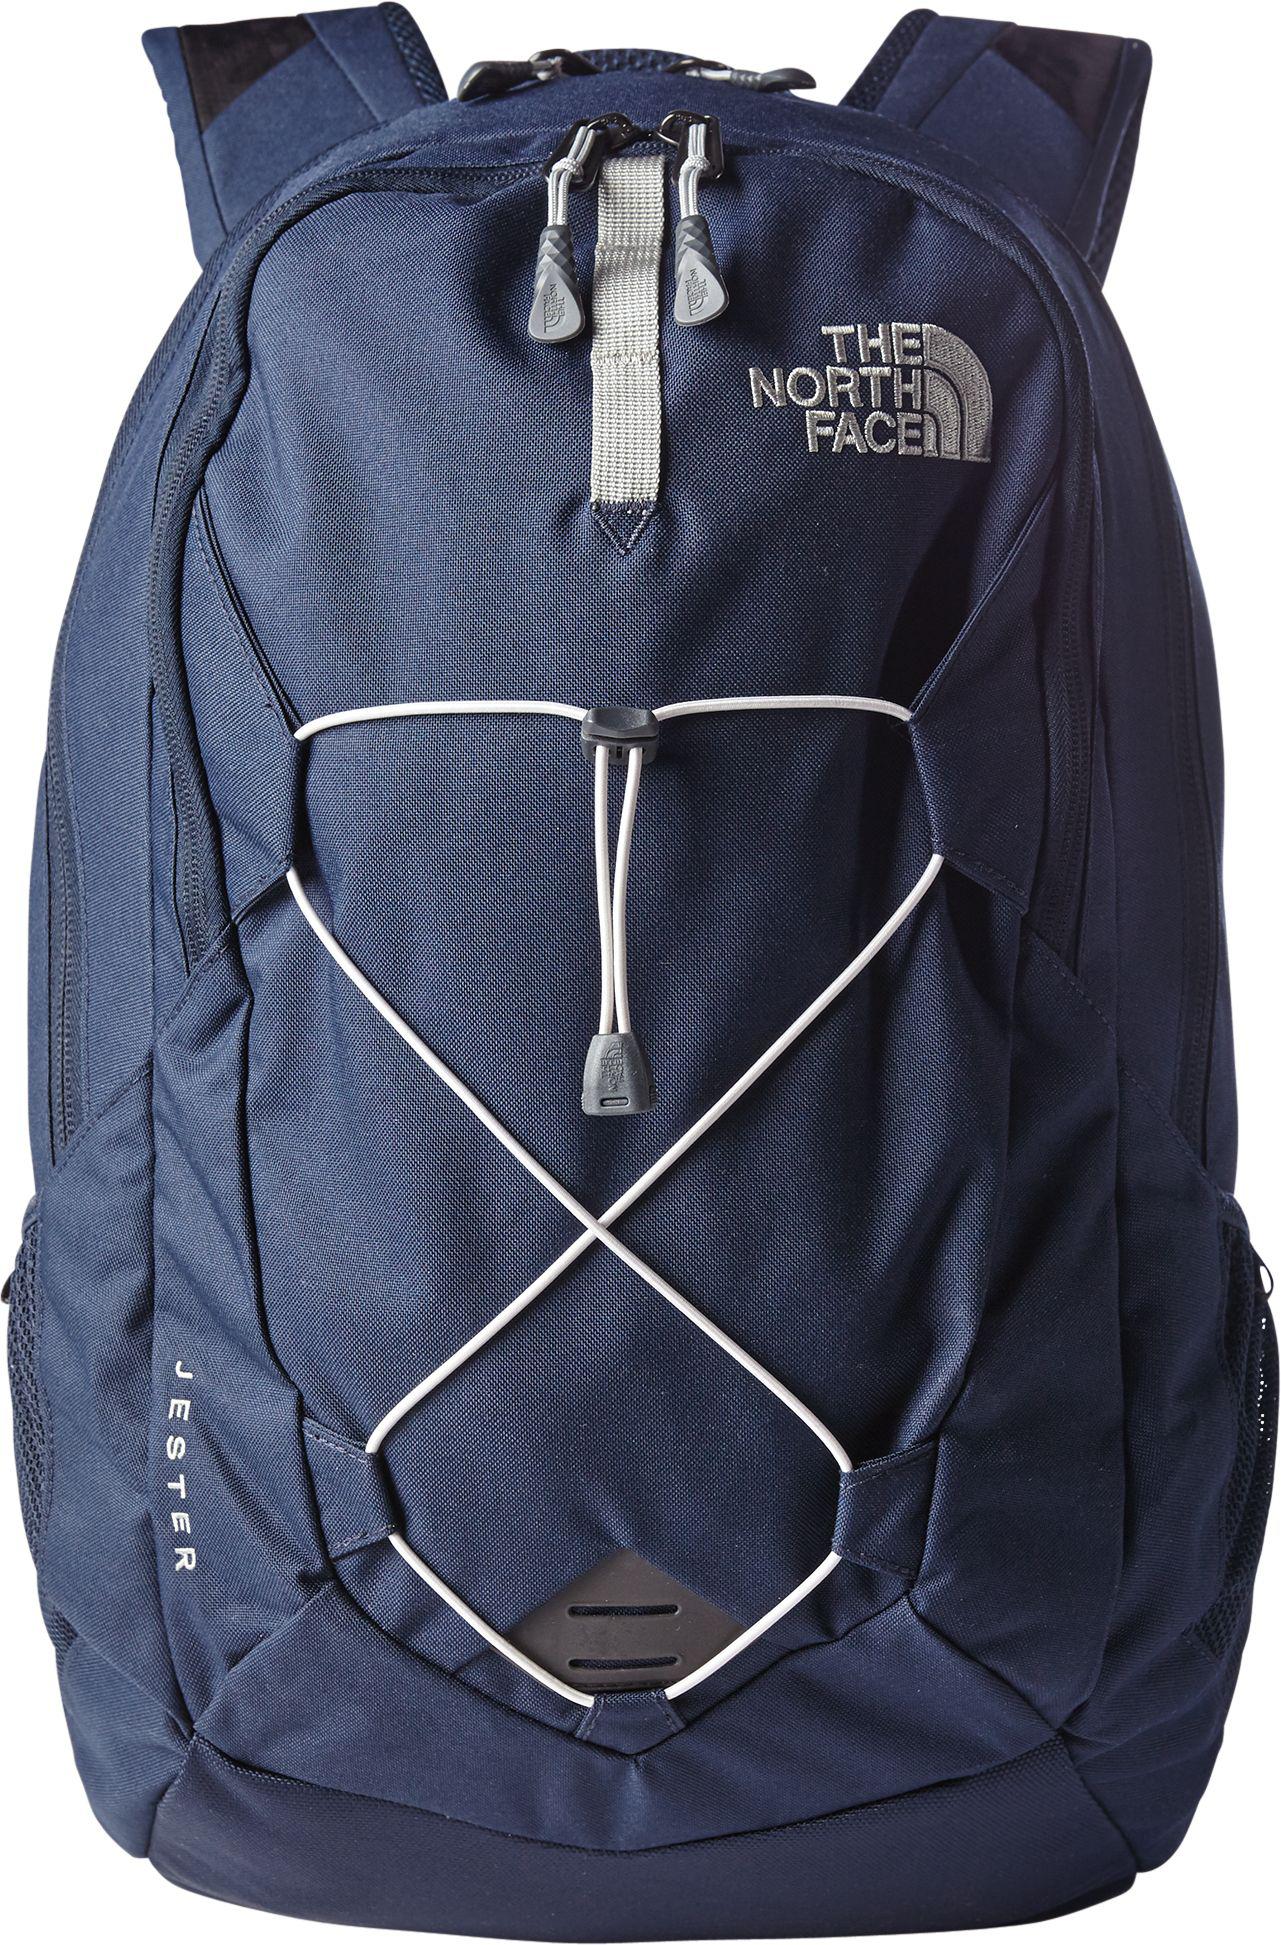 north face bag blue